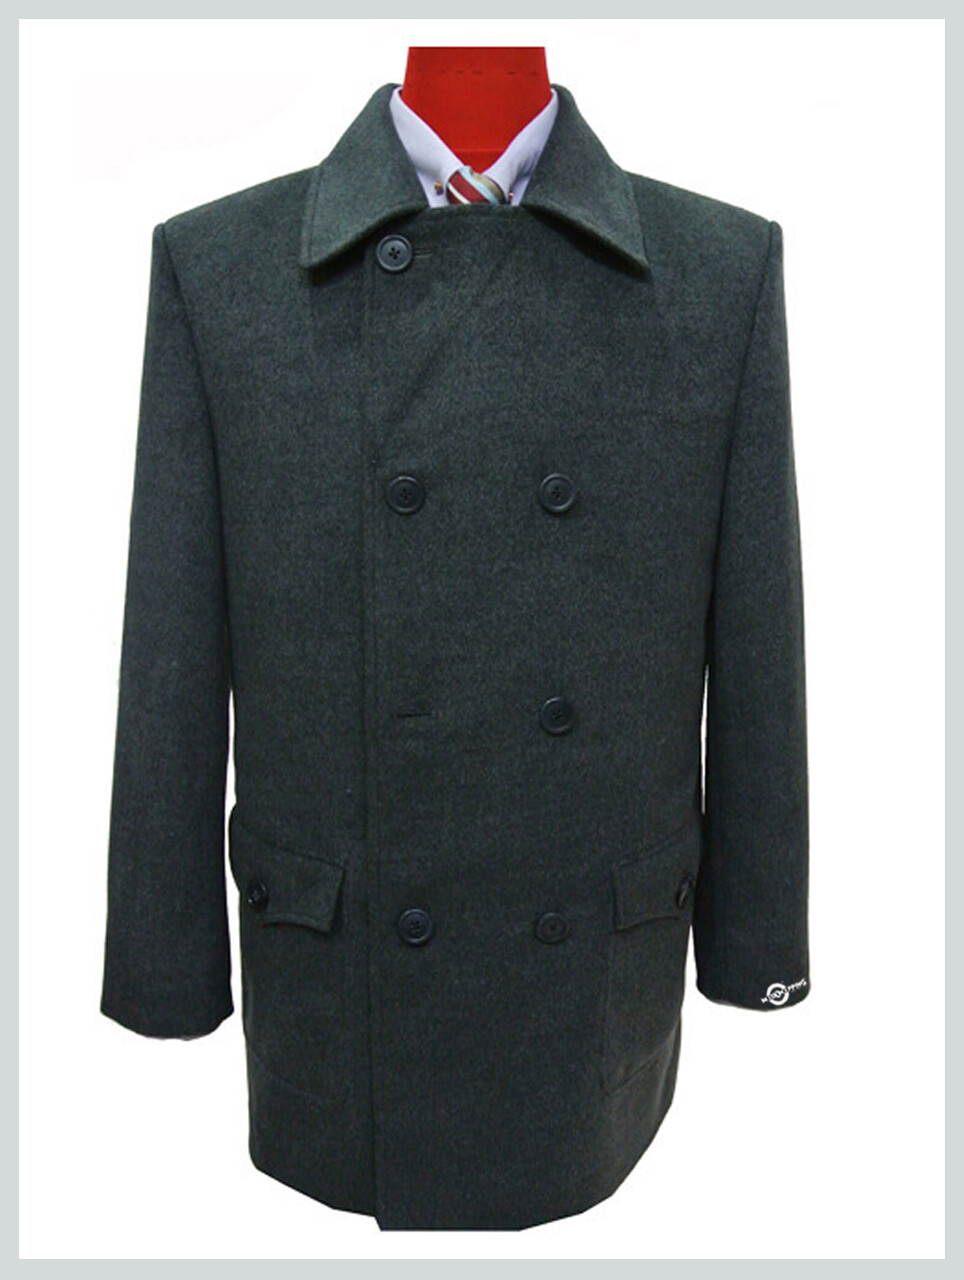 grey pea coat| retro vintage mod style wool classic pea coat for men